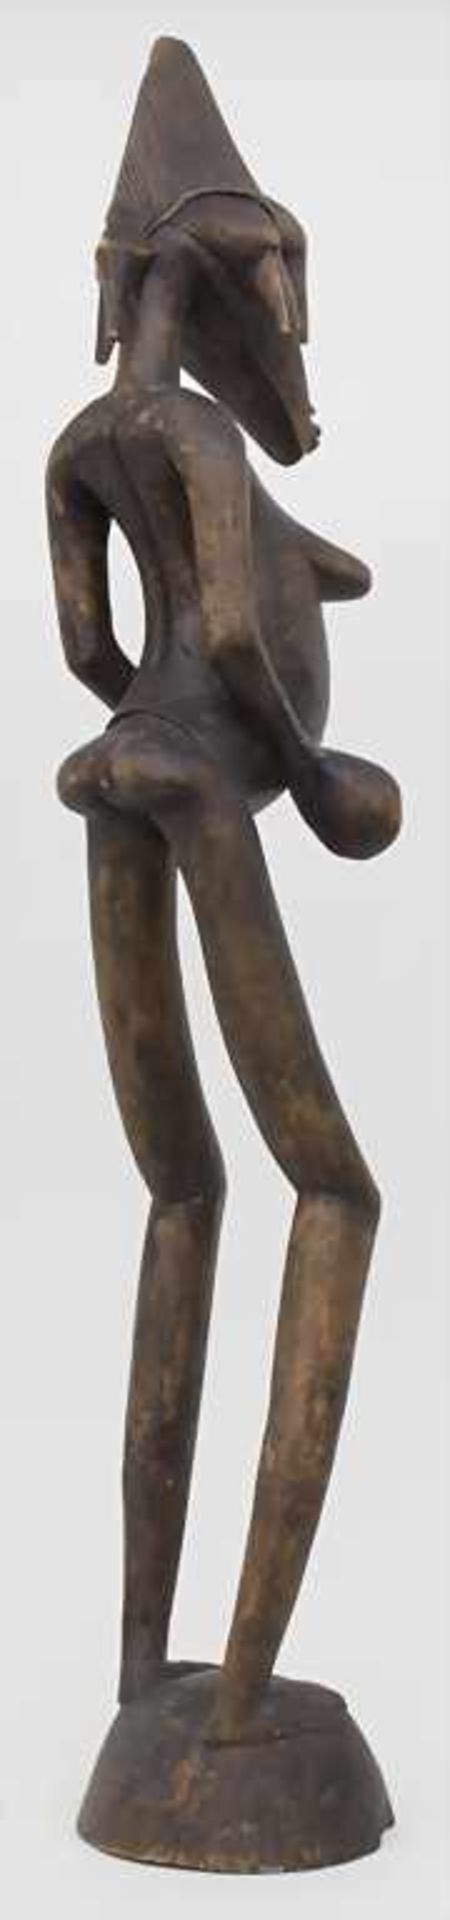 Weibliche Figur / A female figure, AfrikaMaterial: Holz, dunkelbraun patiniert,Höhe: 109 cm,Zustand: - Image 4 of 4